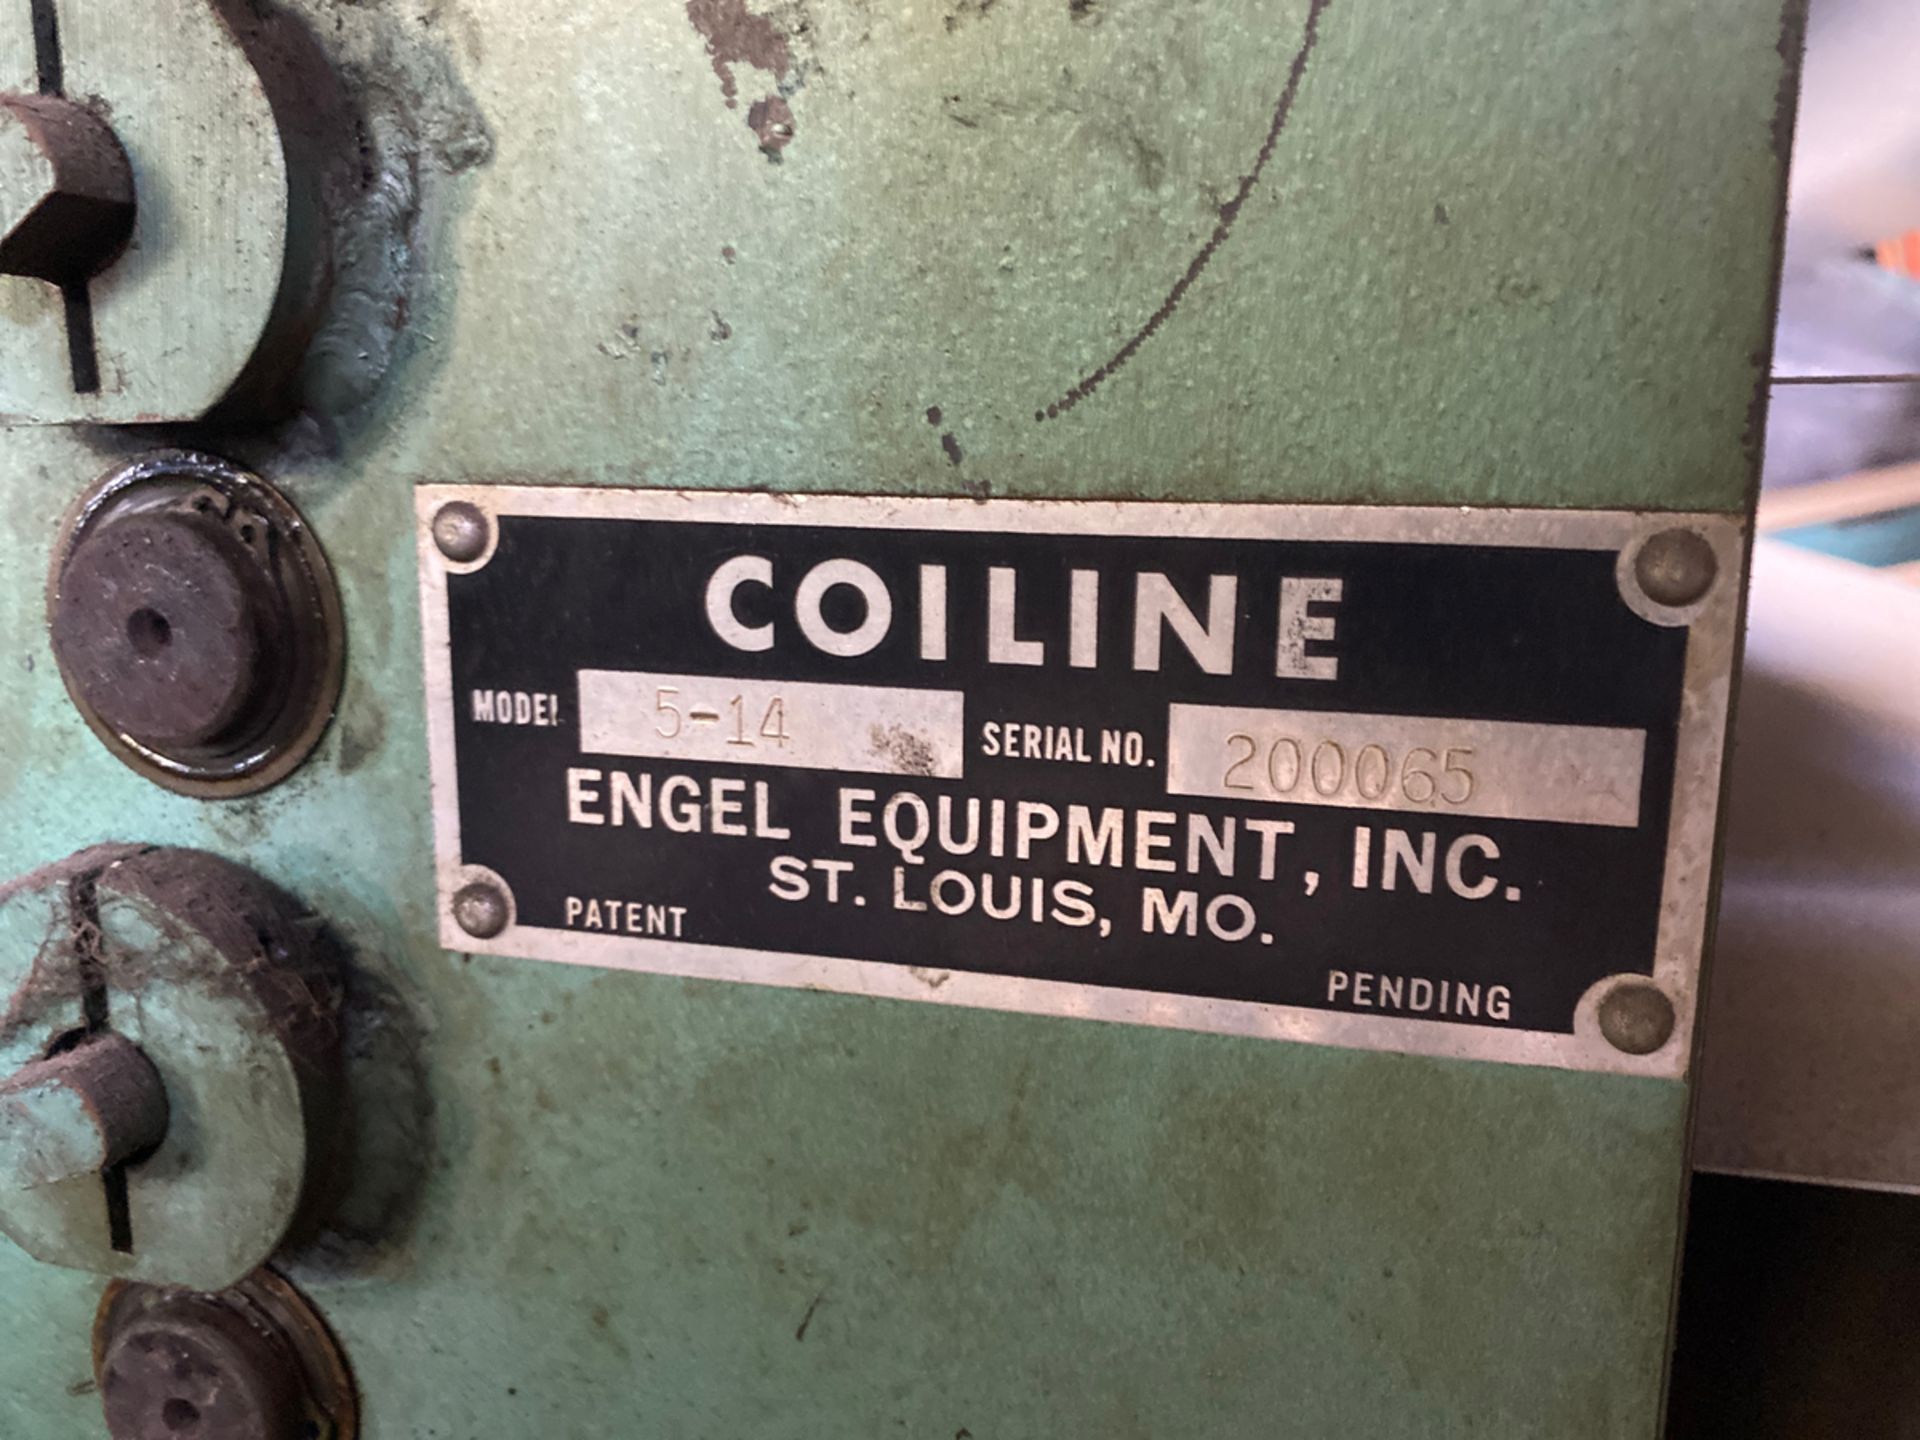 Engel Coiline Model 5-14, Serial Number 200065 - Image 45 of 45